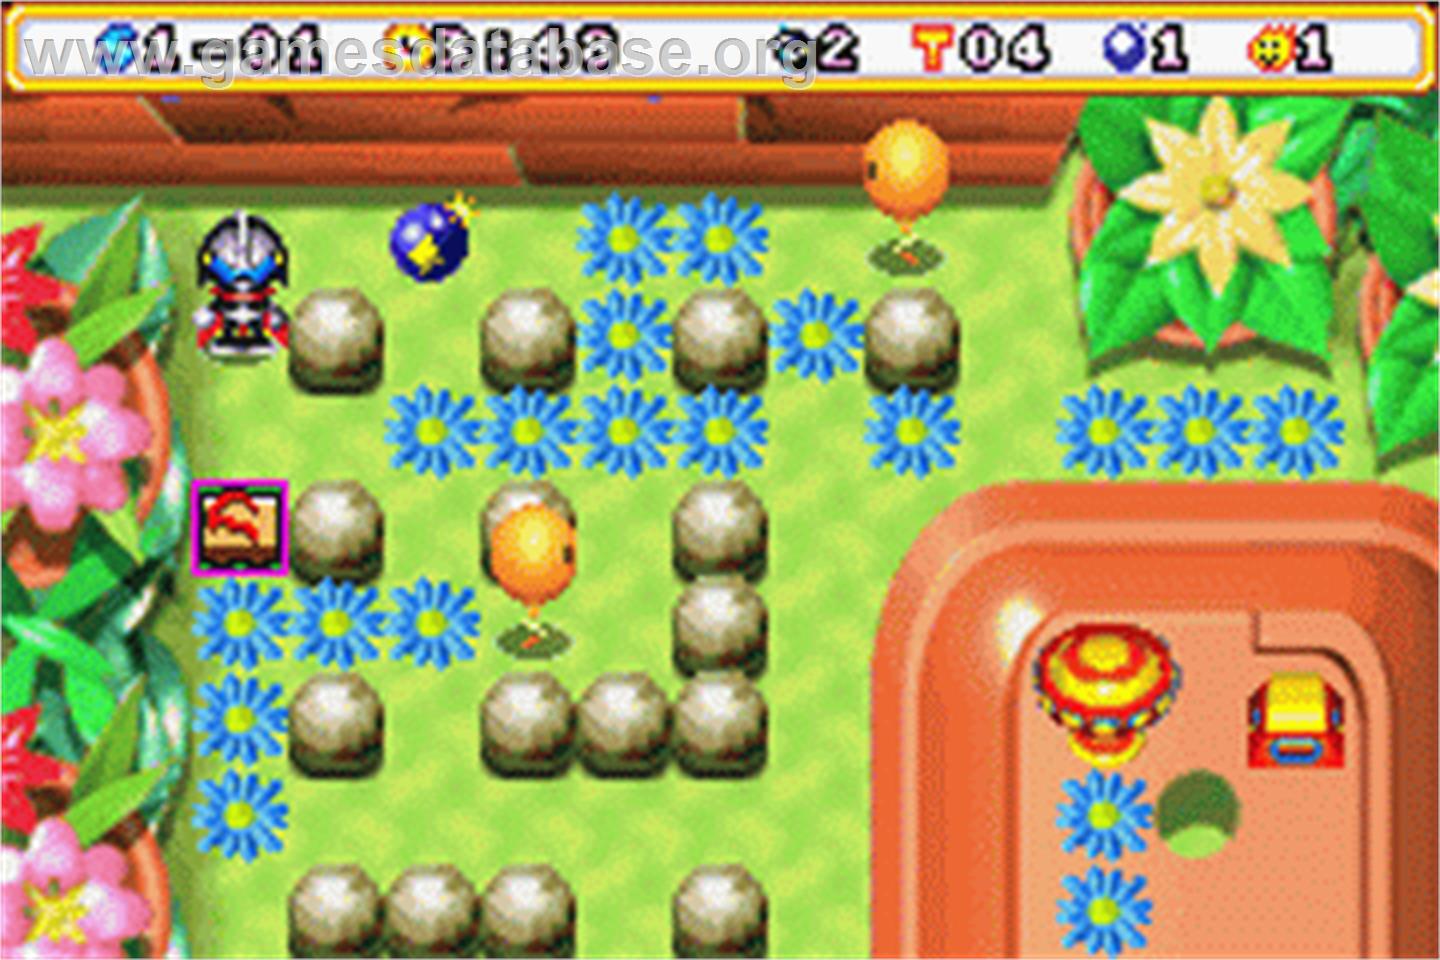 Bomberman Max 2: Red Advance - Nintendo Game Boy Advance - Artwork - In Game